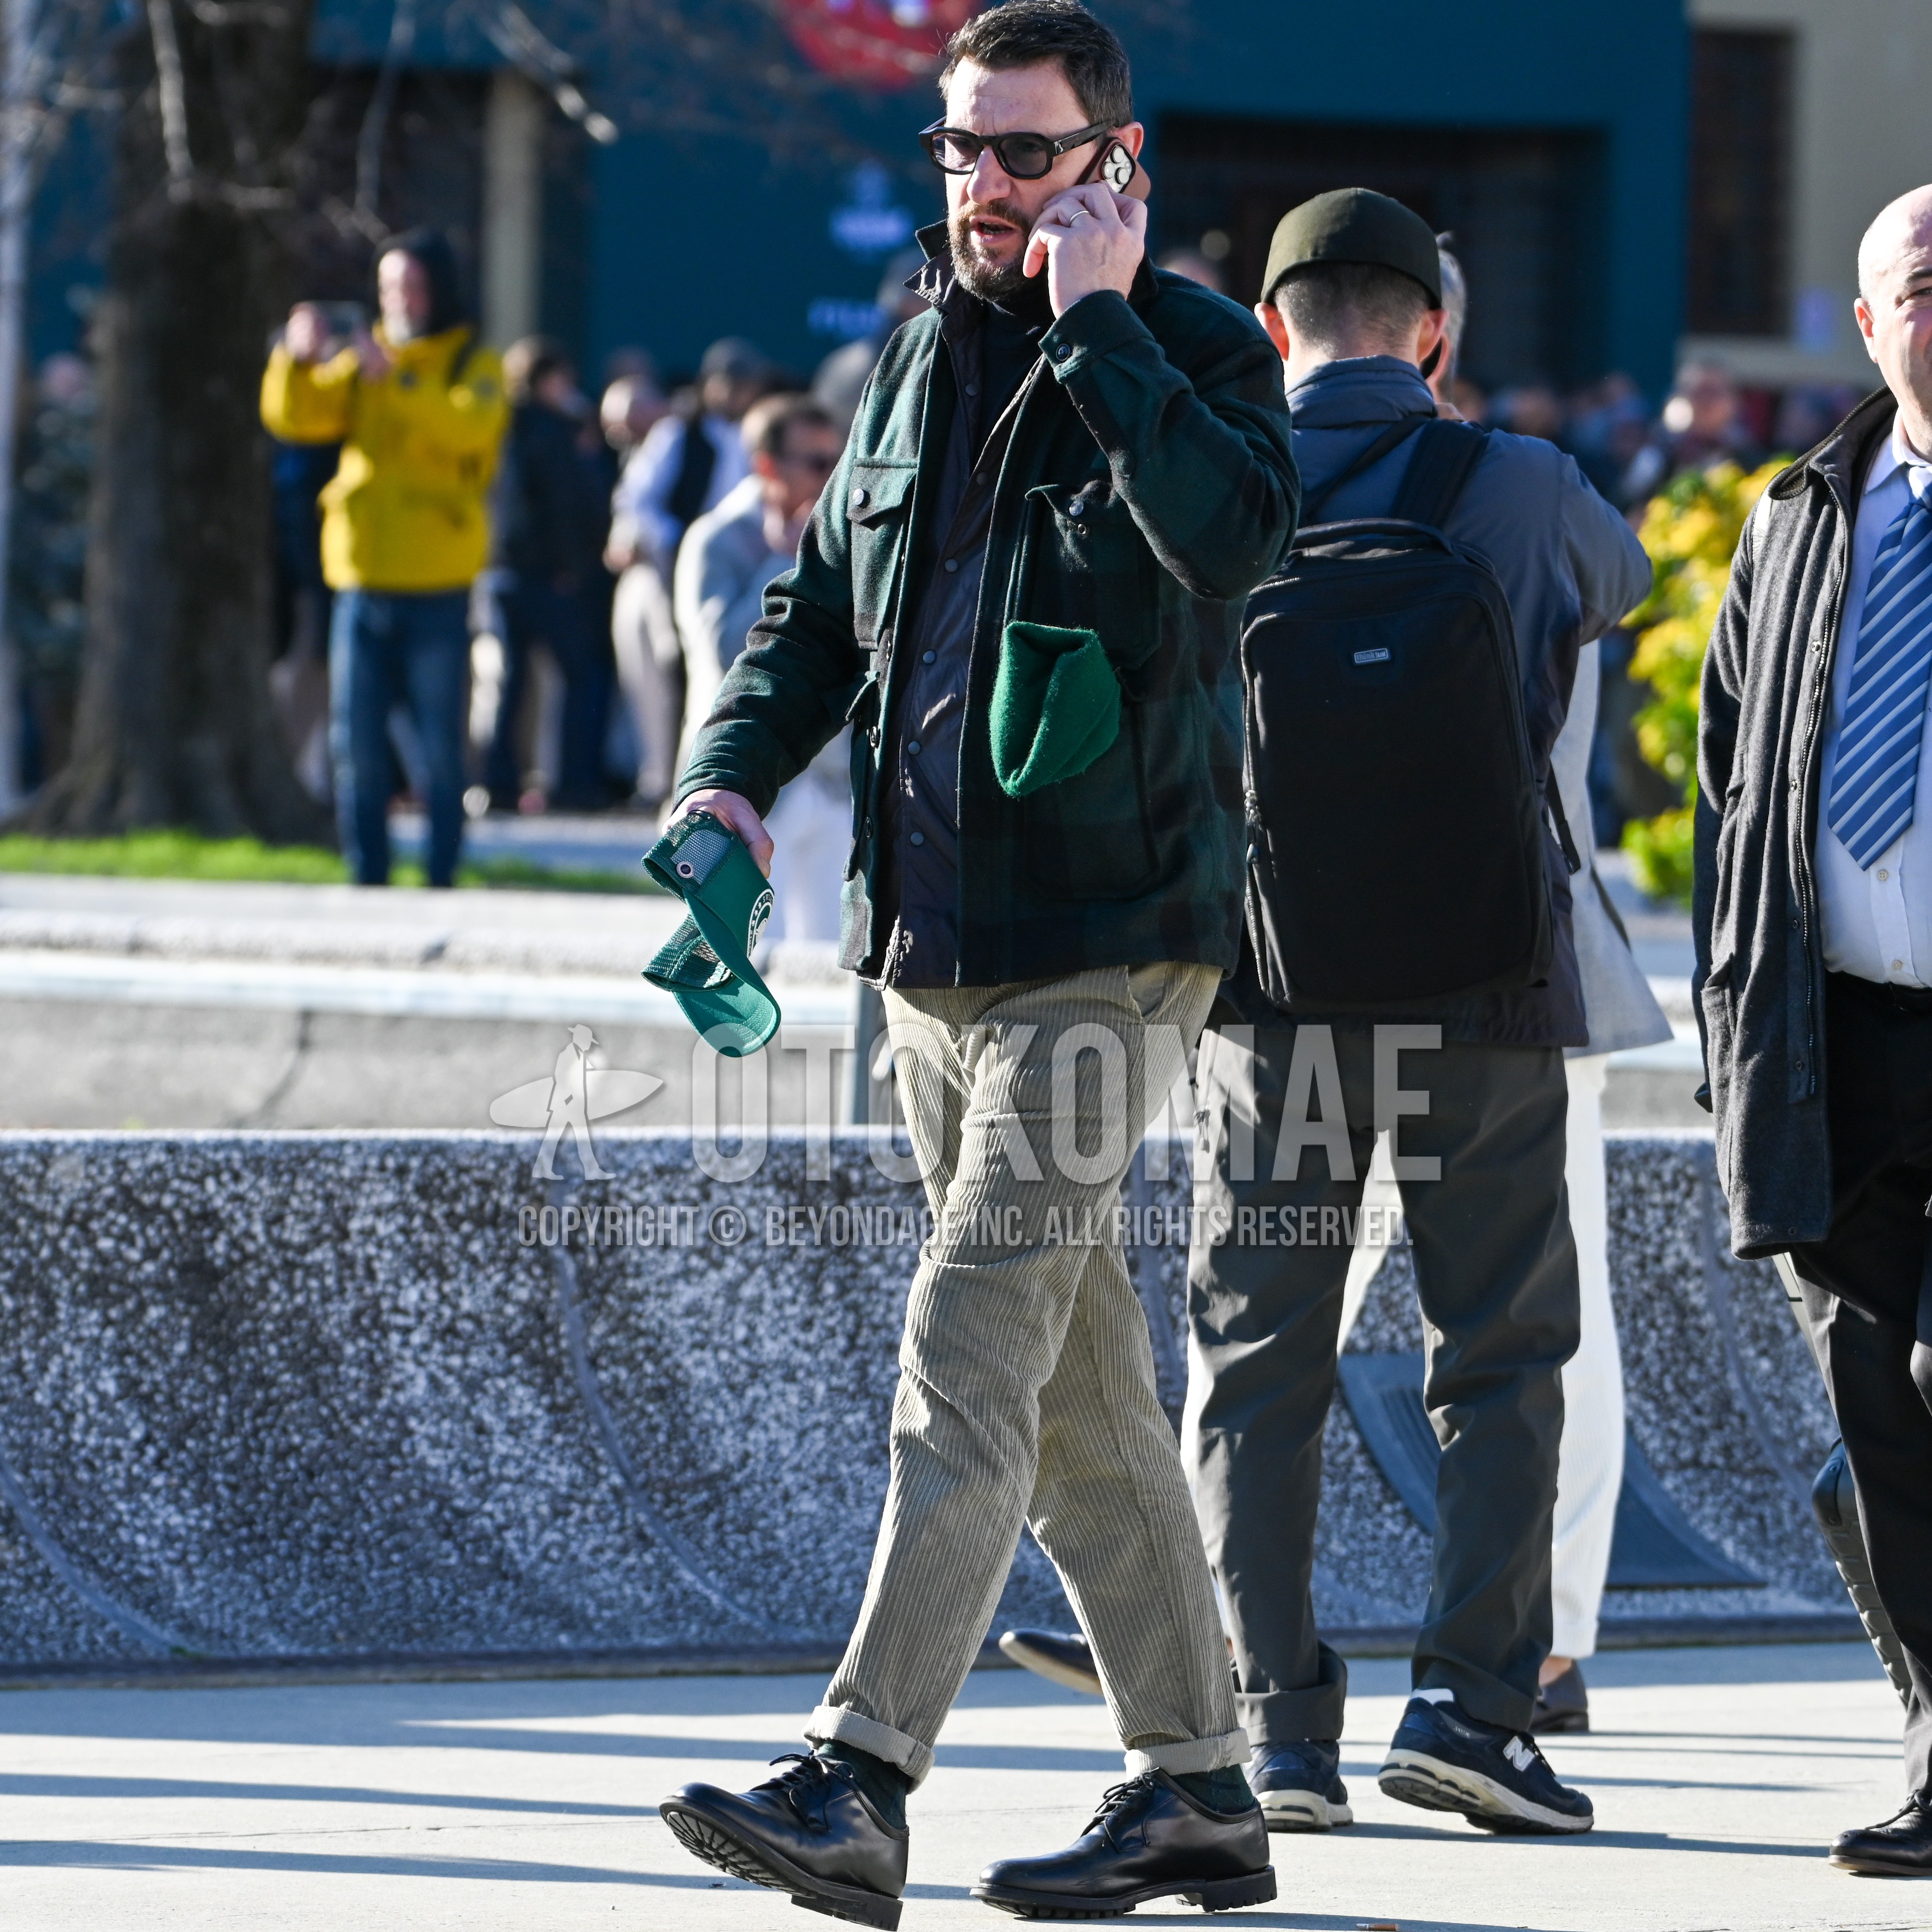 Men's autumn winter outfit with black plain sunglasses, green check shirt jacket, navy plain shirt, beige plain winter pants (corduroy,velour), black plain socks, black plain toe leather shoes.